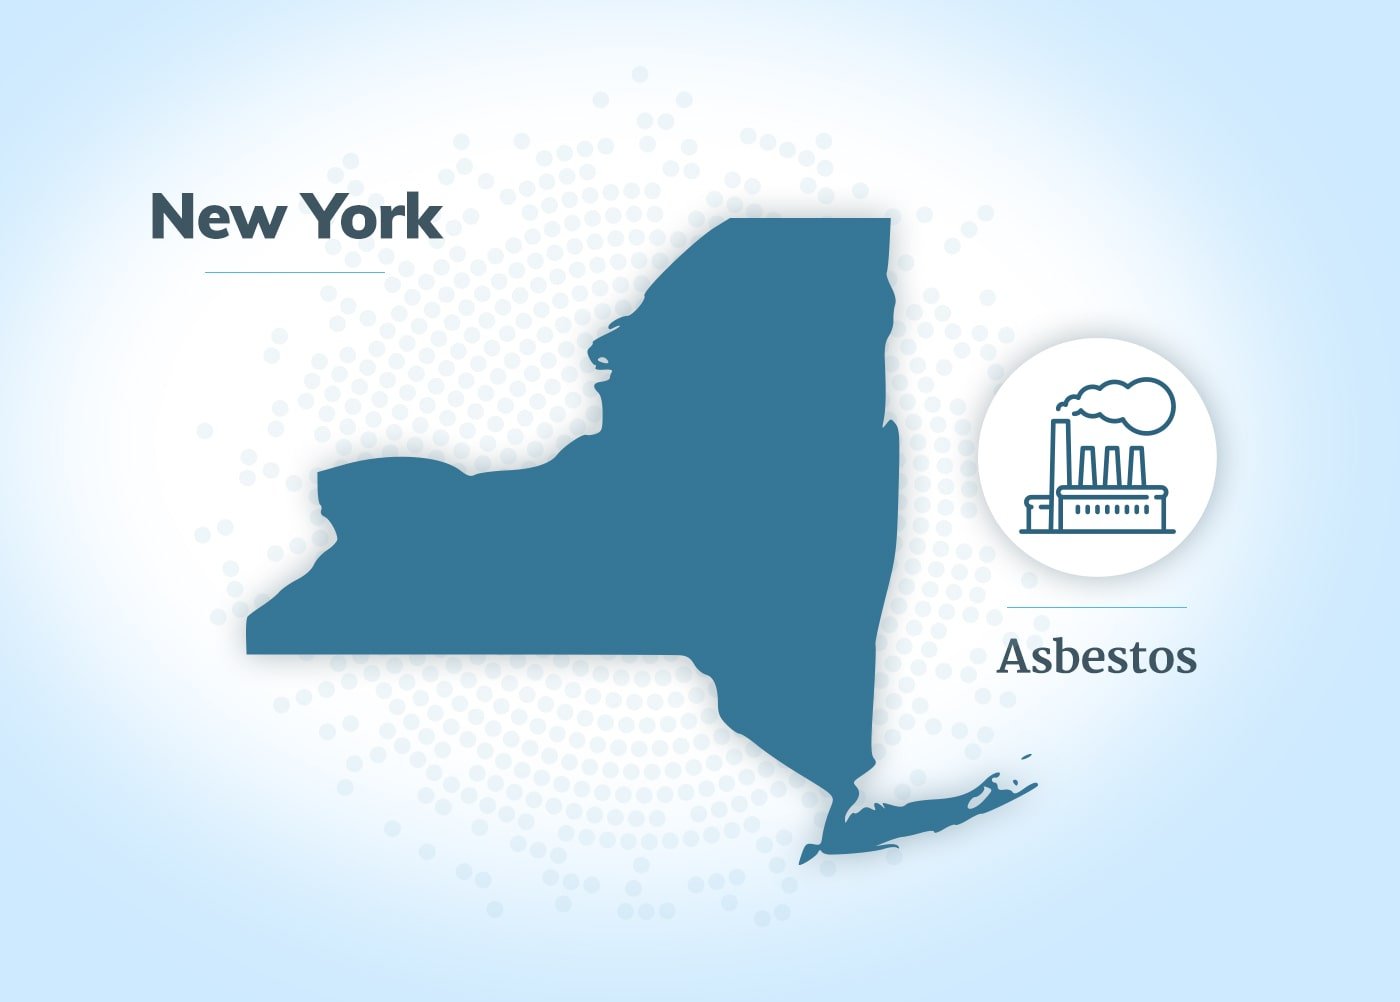 Asbestos exposure in New York